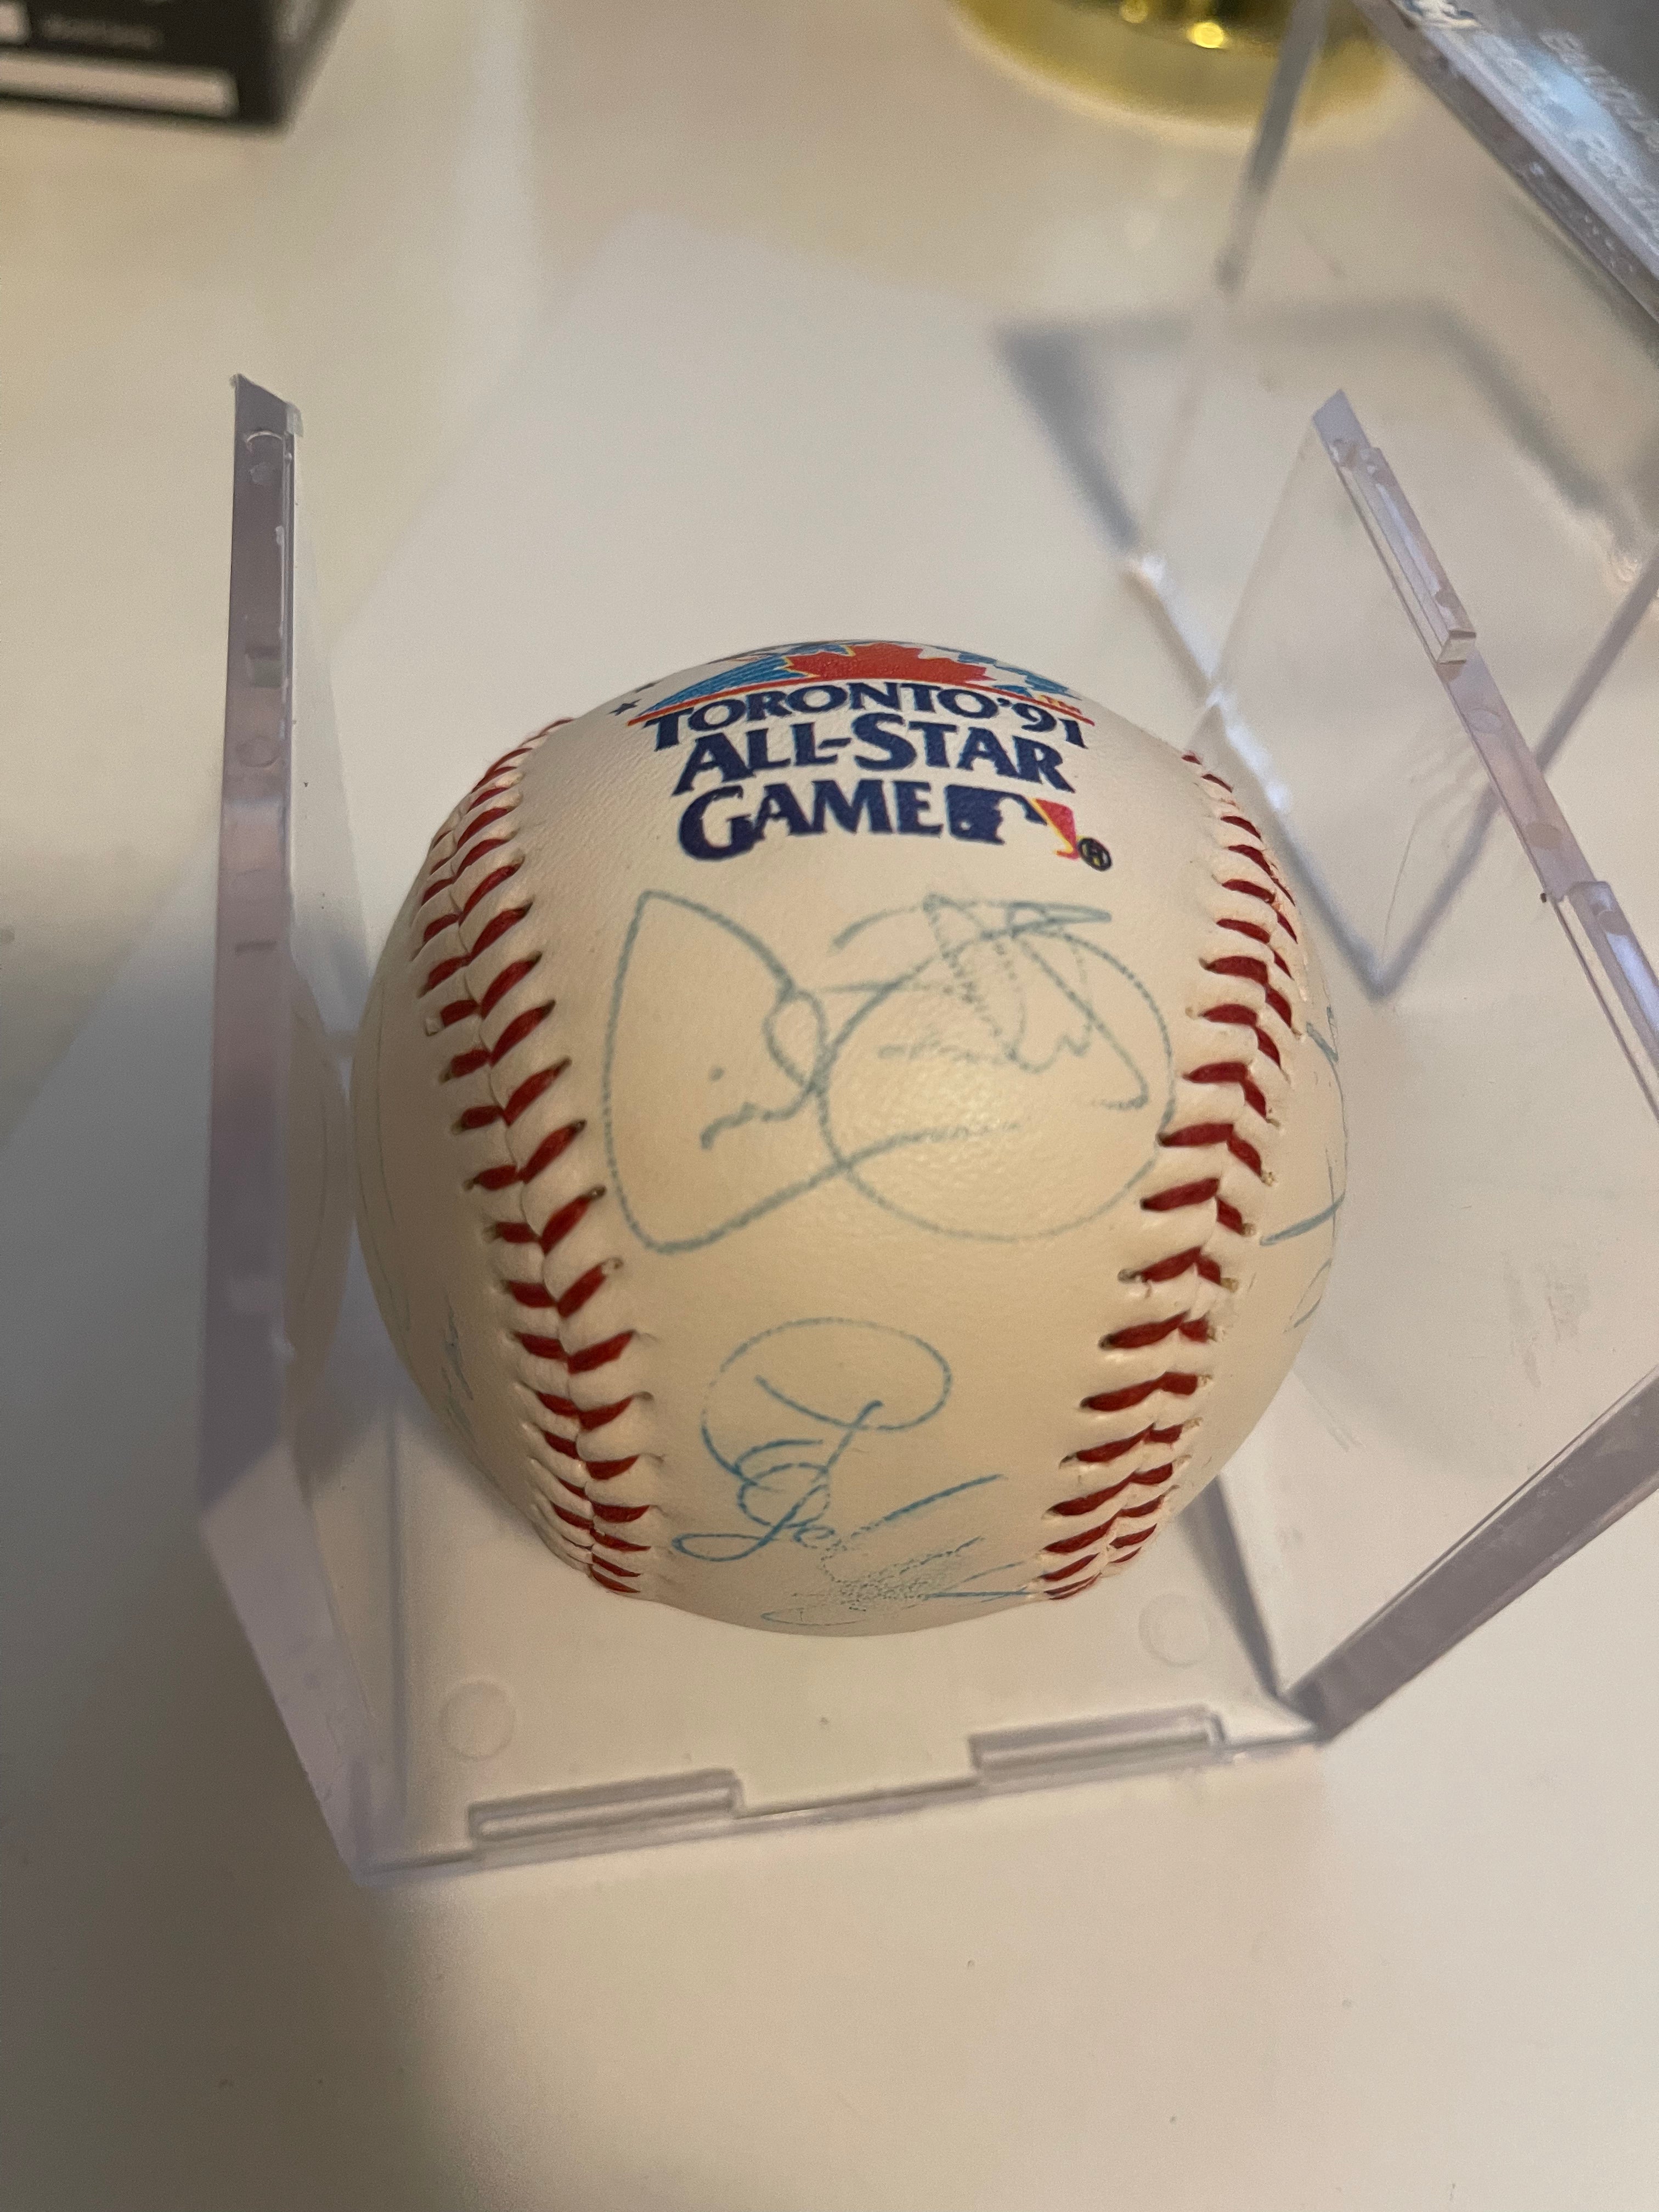 1991 All-Star Baseball game multiple autographs rare ball with COA